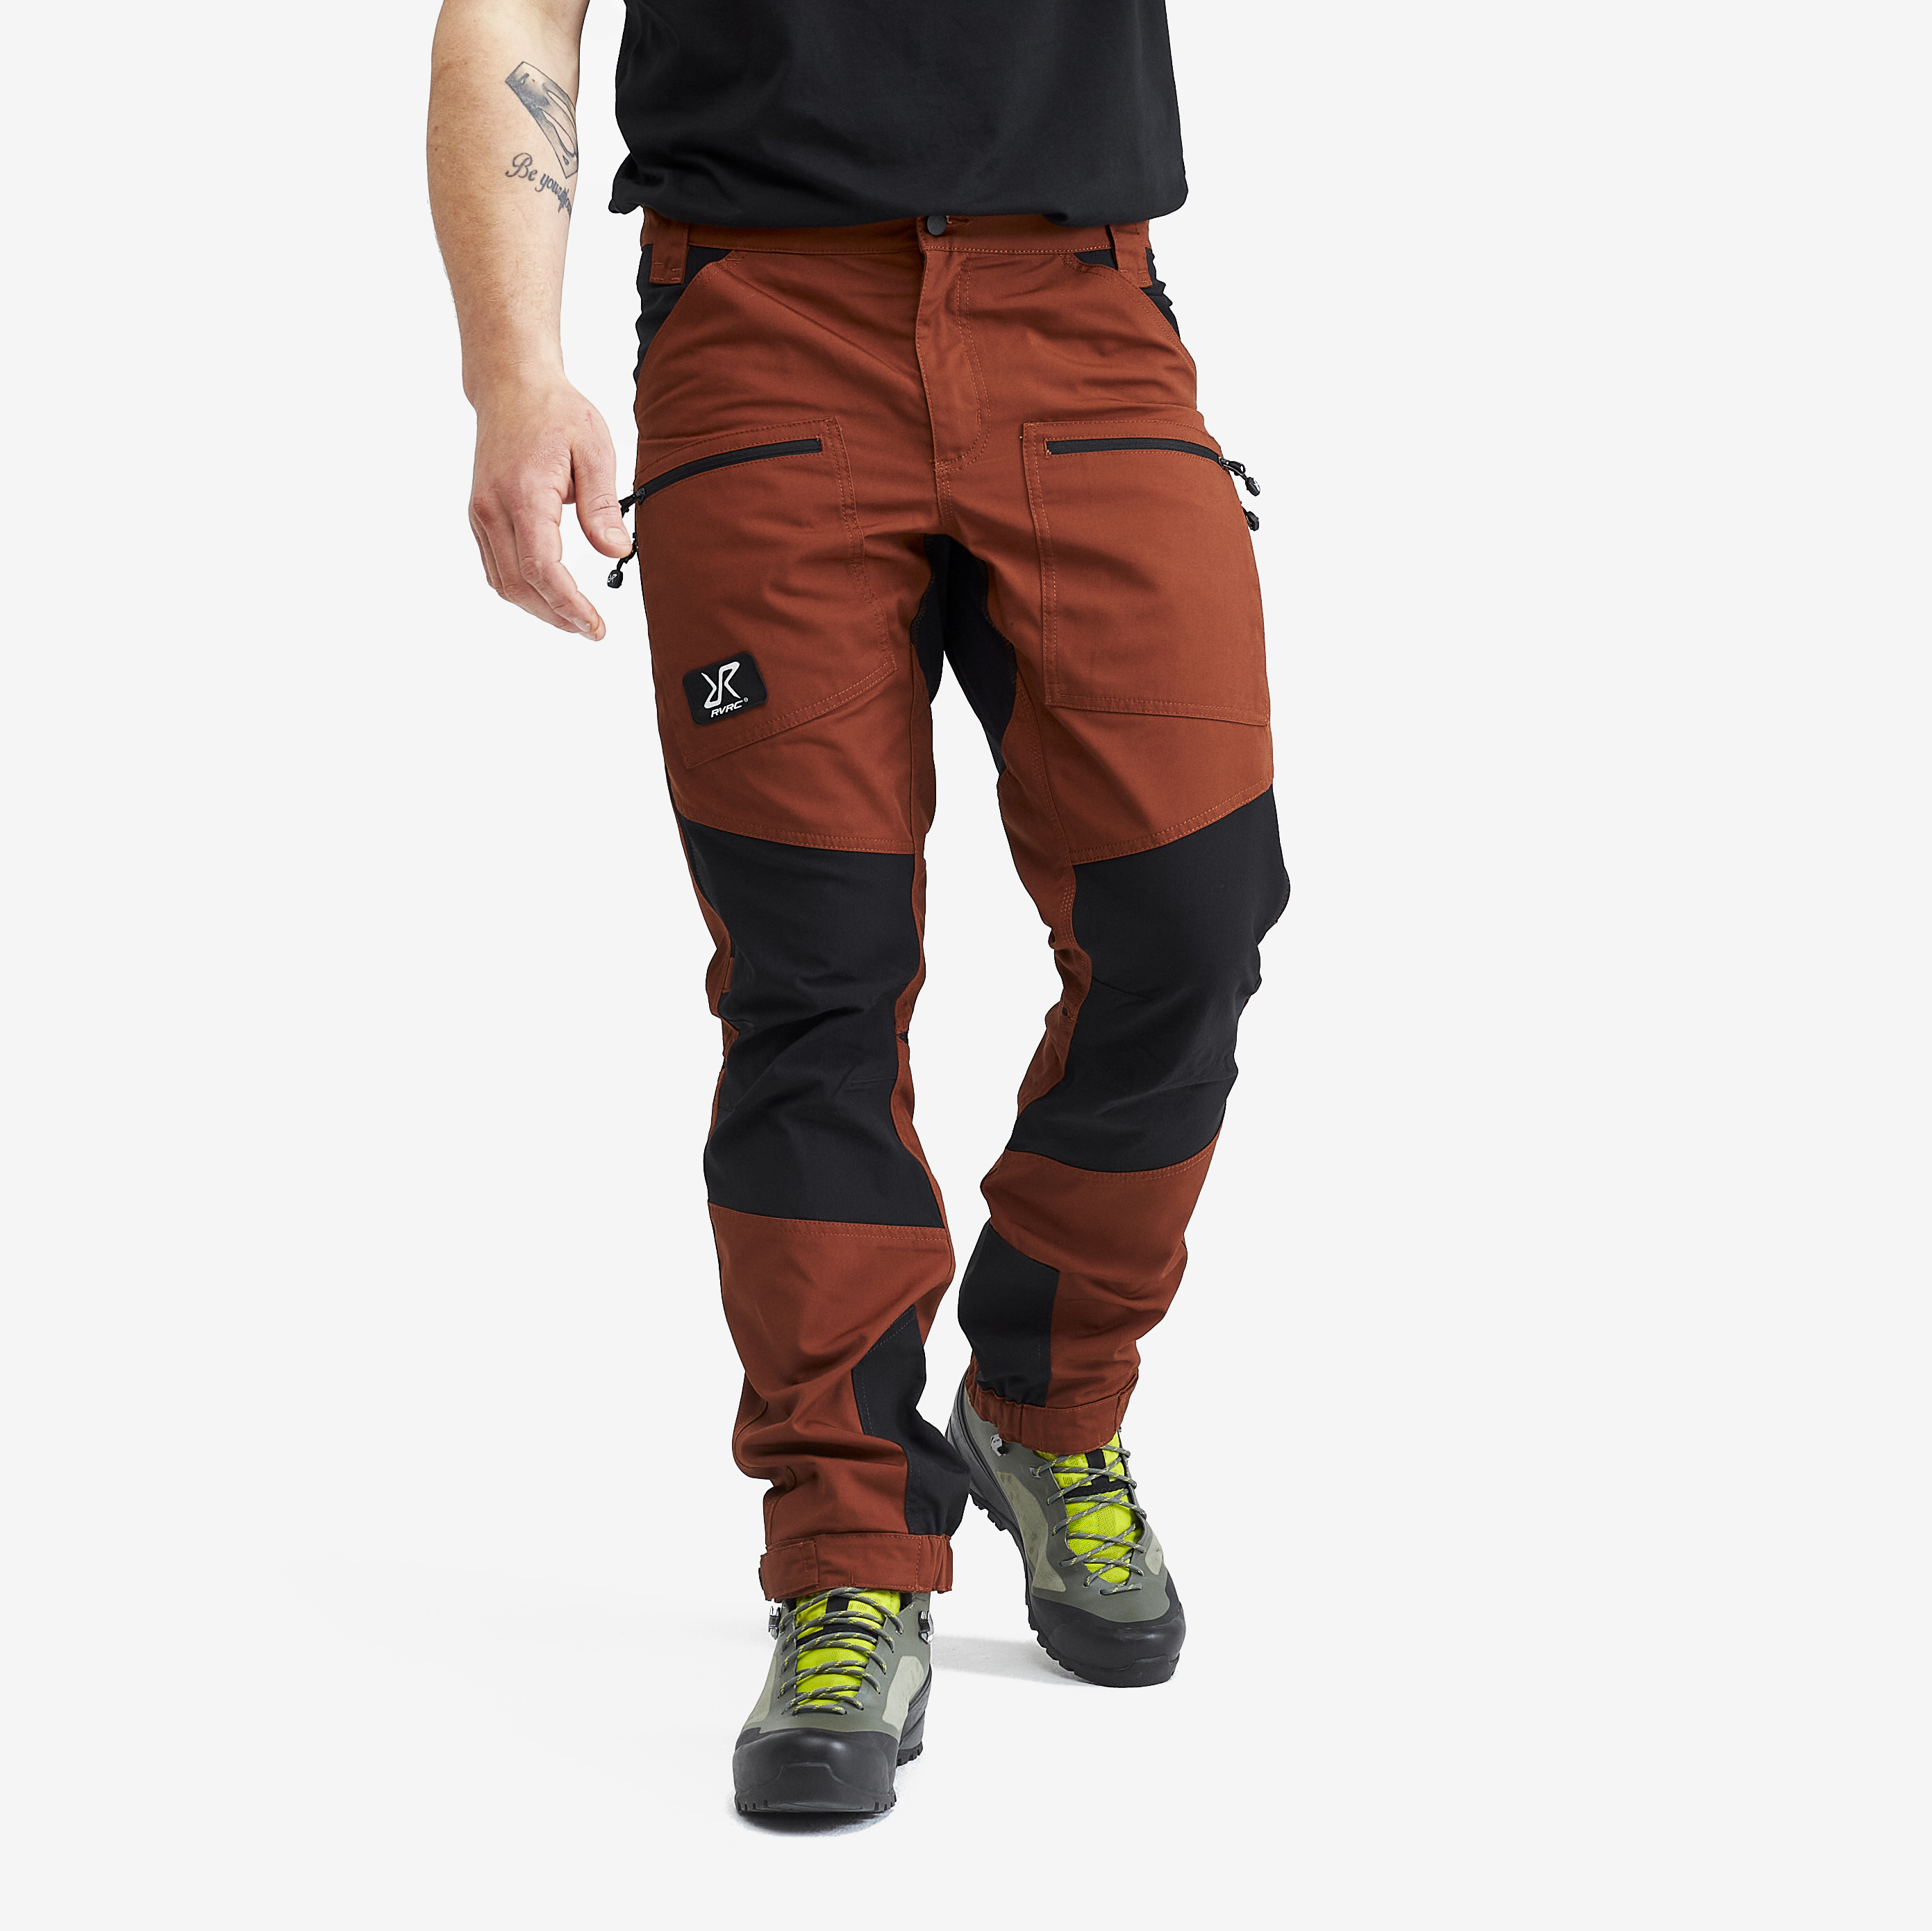 Nordwand Pro Short Pants – Herr – Rusty Orange Storlek:L – Friluftsbyxor & Fritidsbyxor